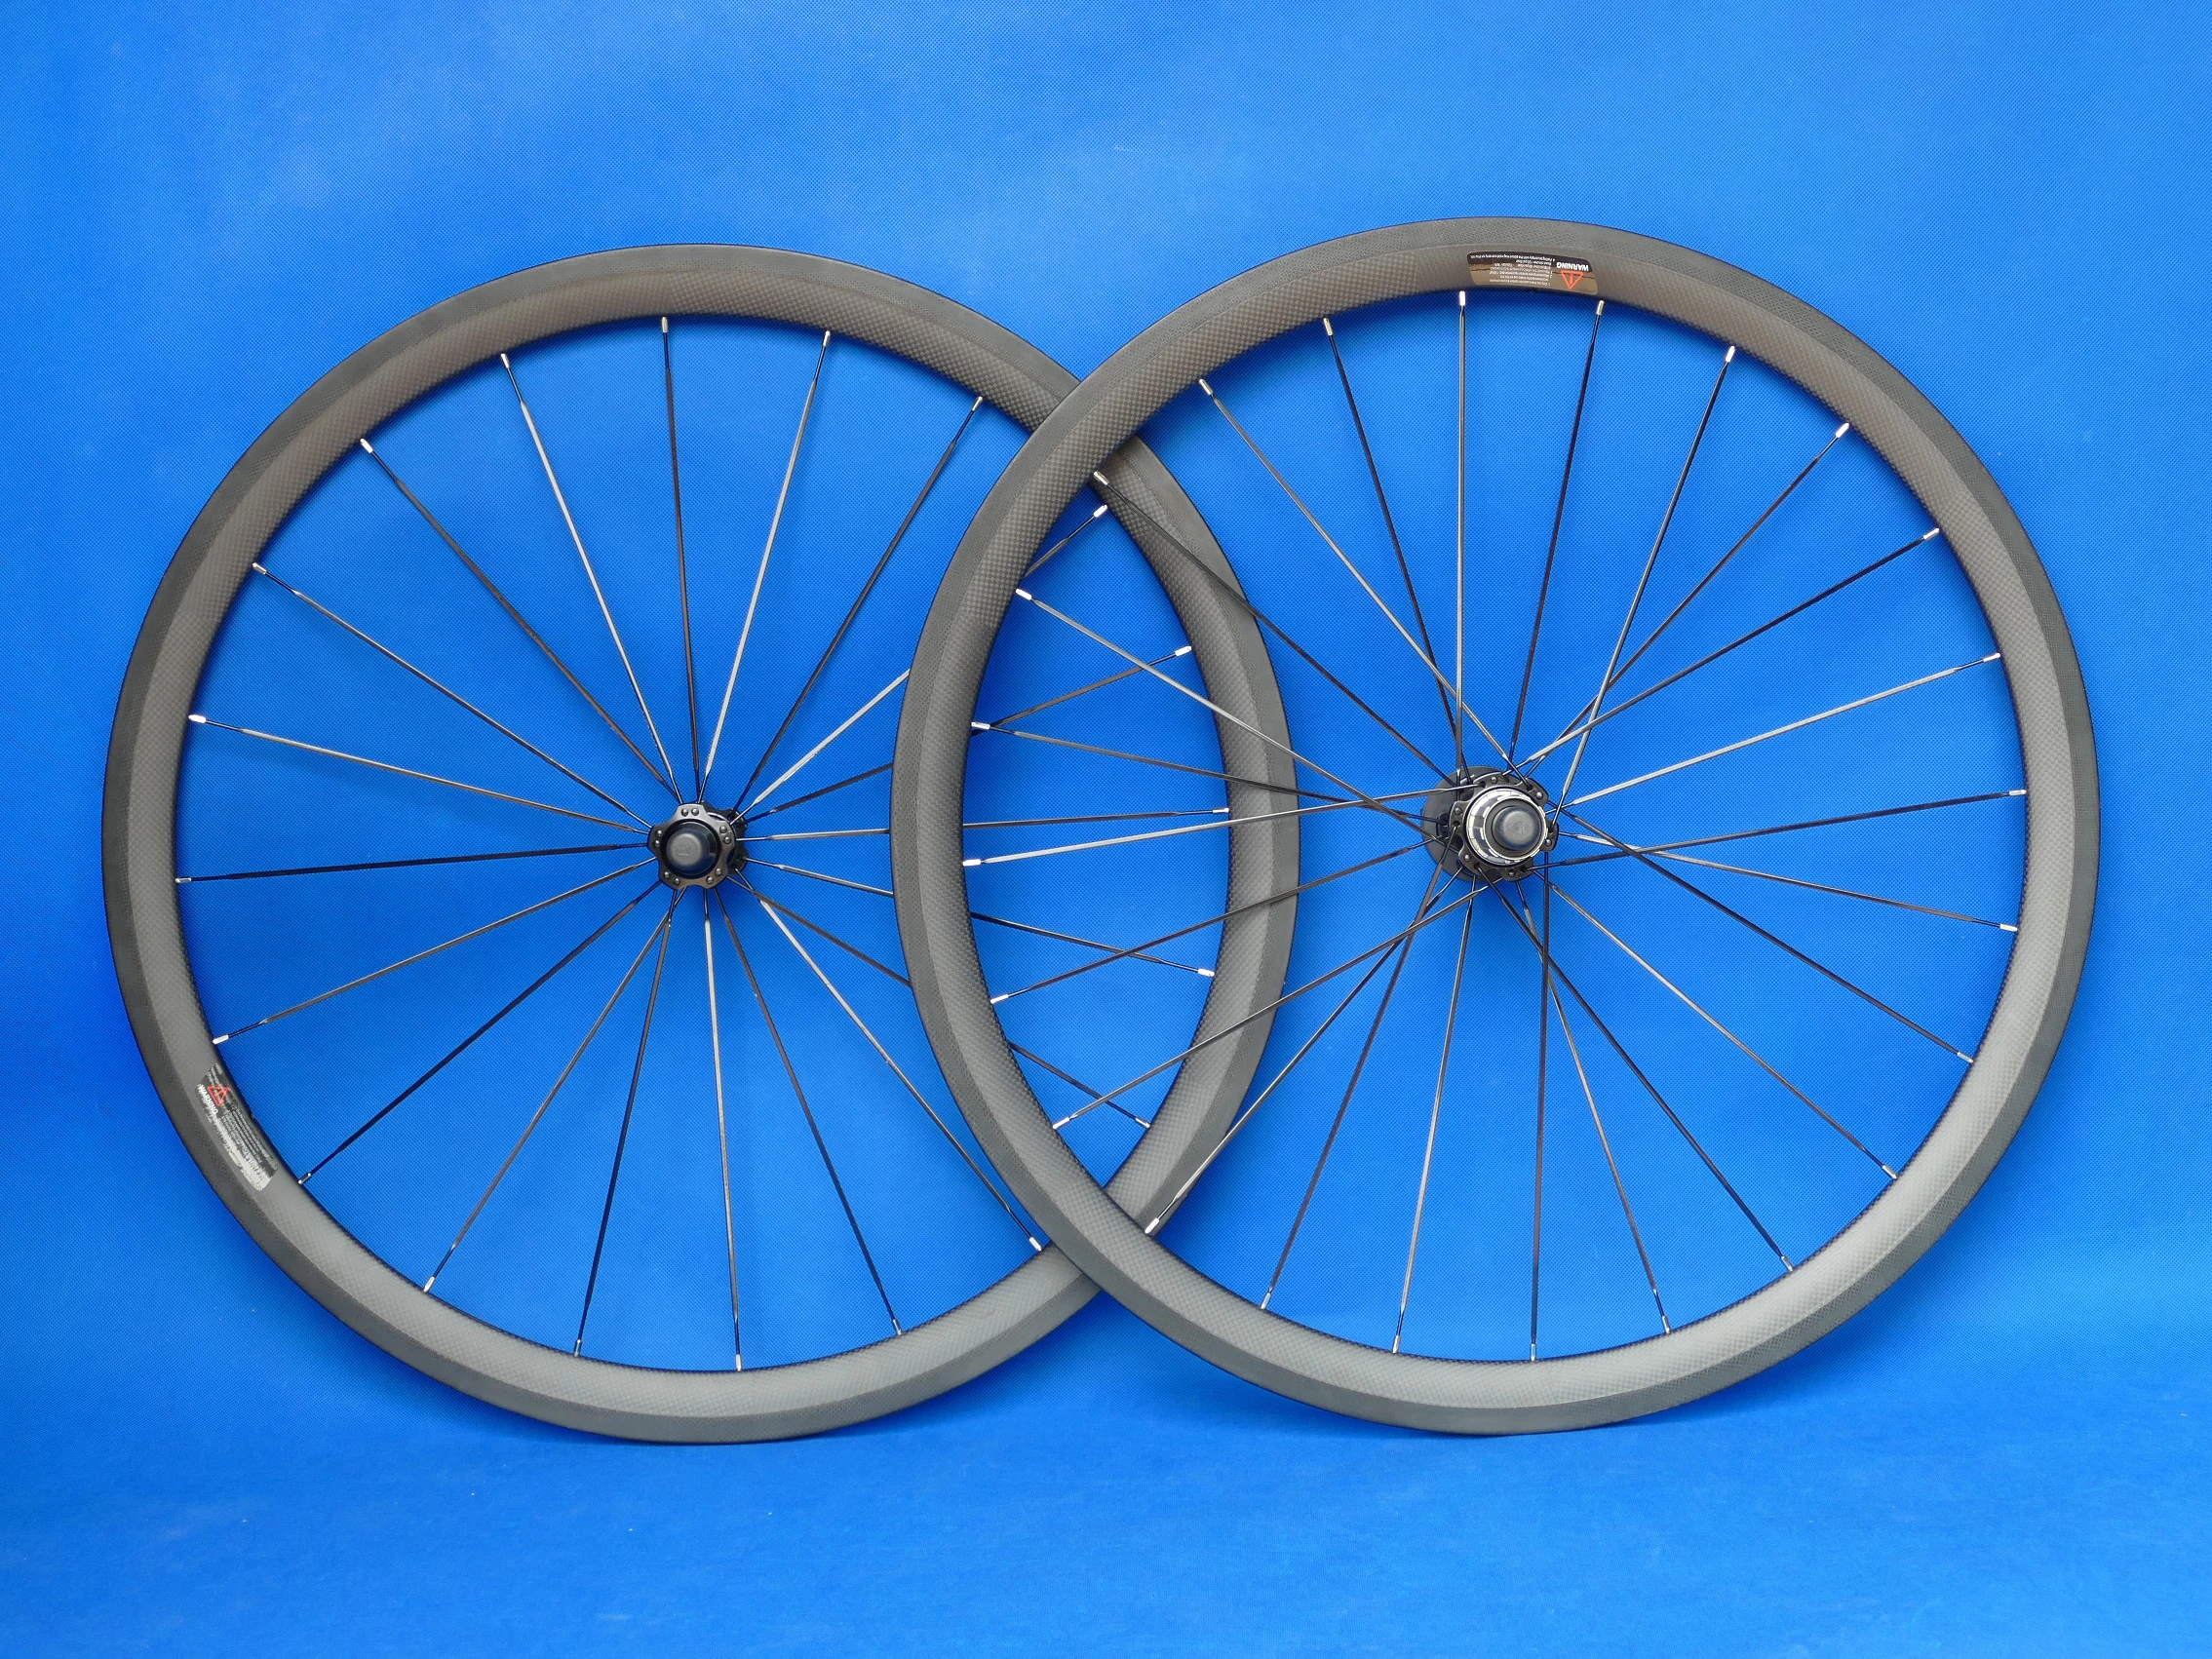 

1 Pair : 3K UD Full Carbon Fiber Matt Glossy Road Bike Clincher Wheelset 38mm - width 25mm Bicycle WHEEL Rim 700C Basalt Side